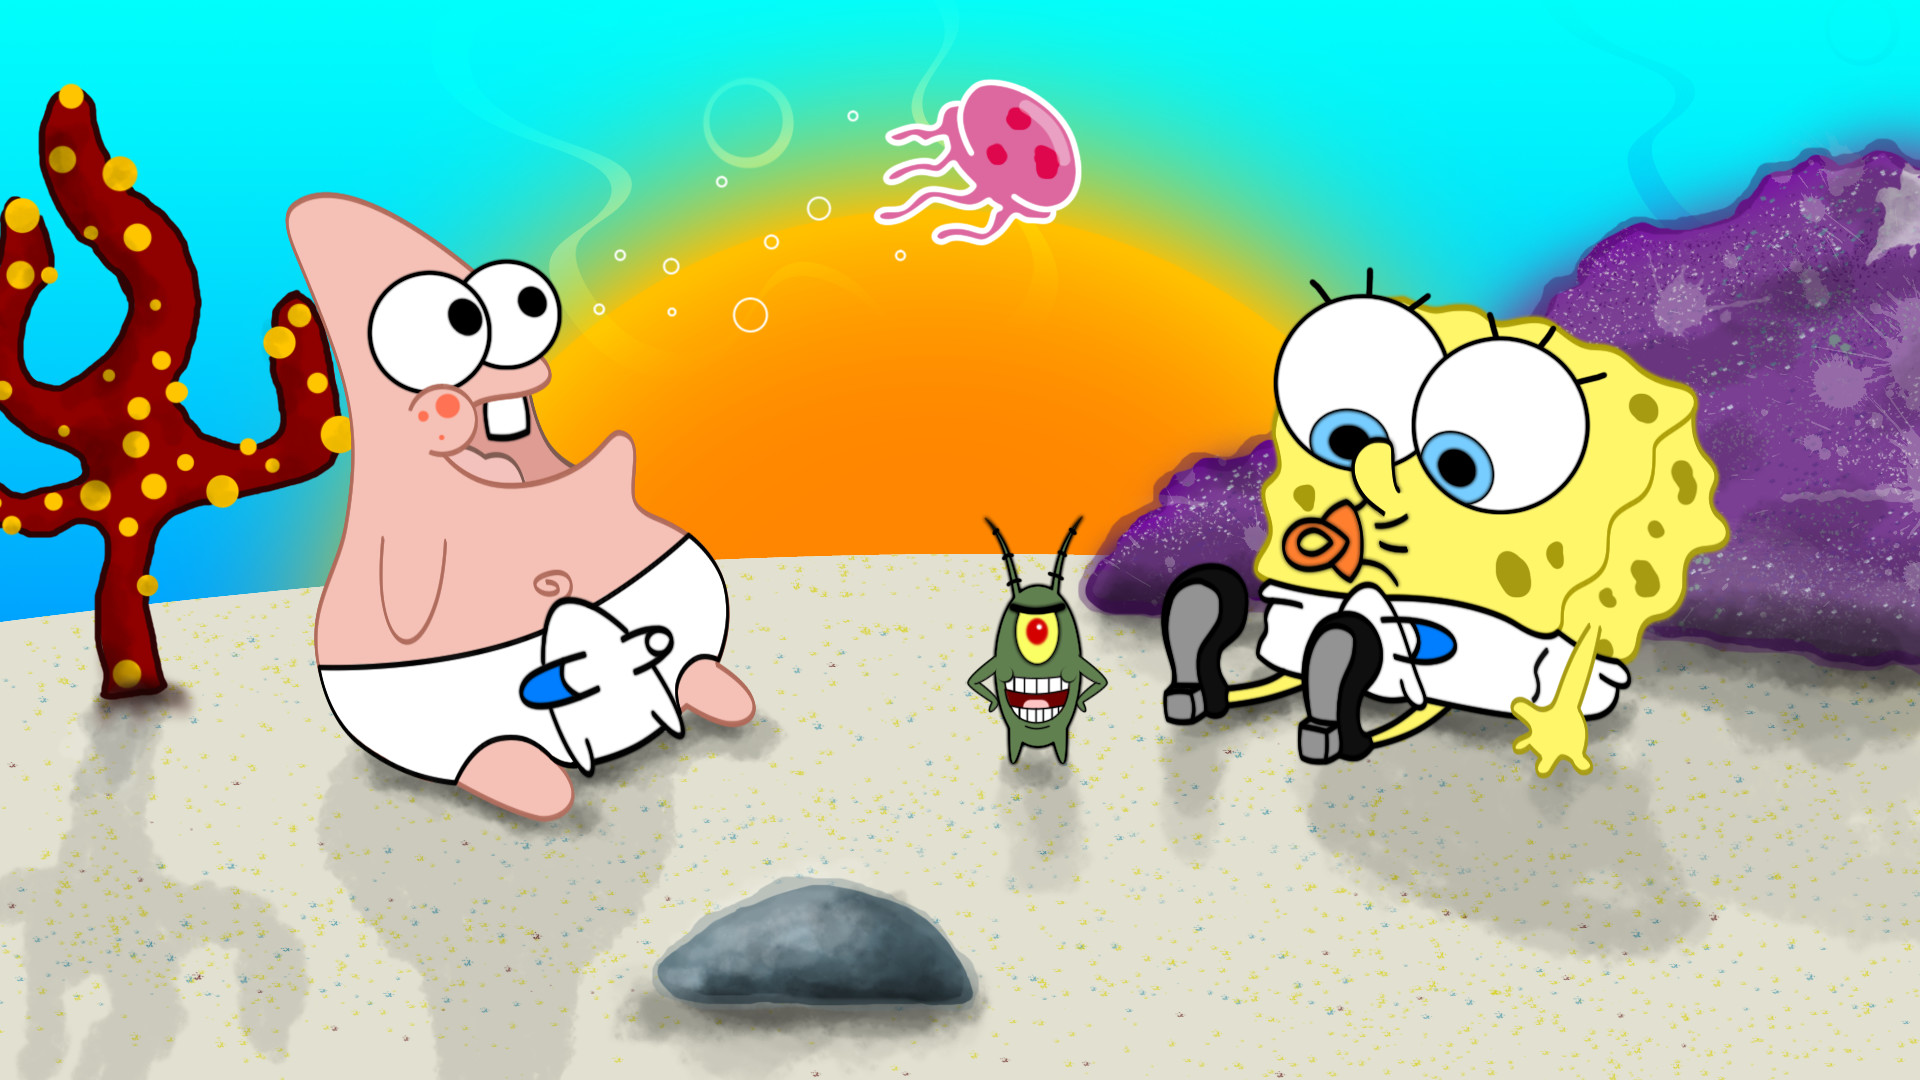 Patrick and SpongeBob are sitting on the beach with Plankton. - SpongeBob